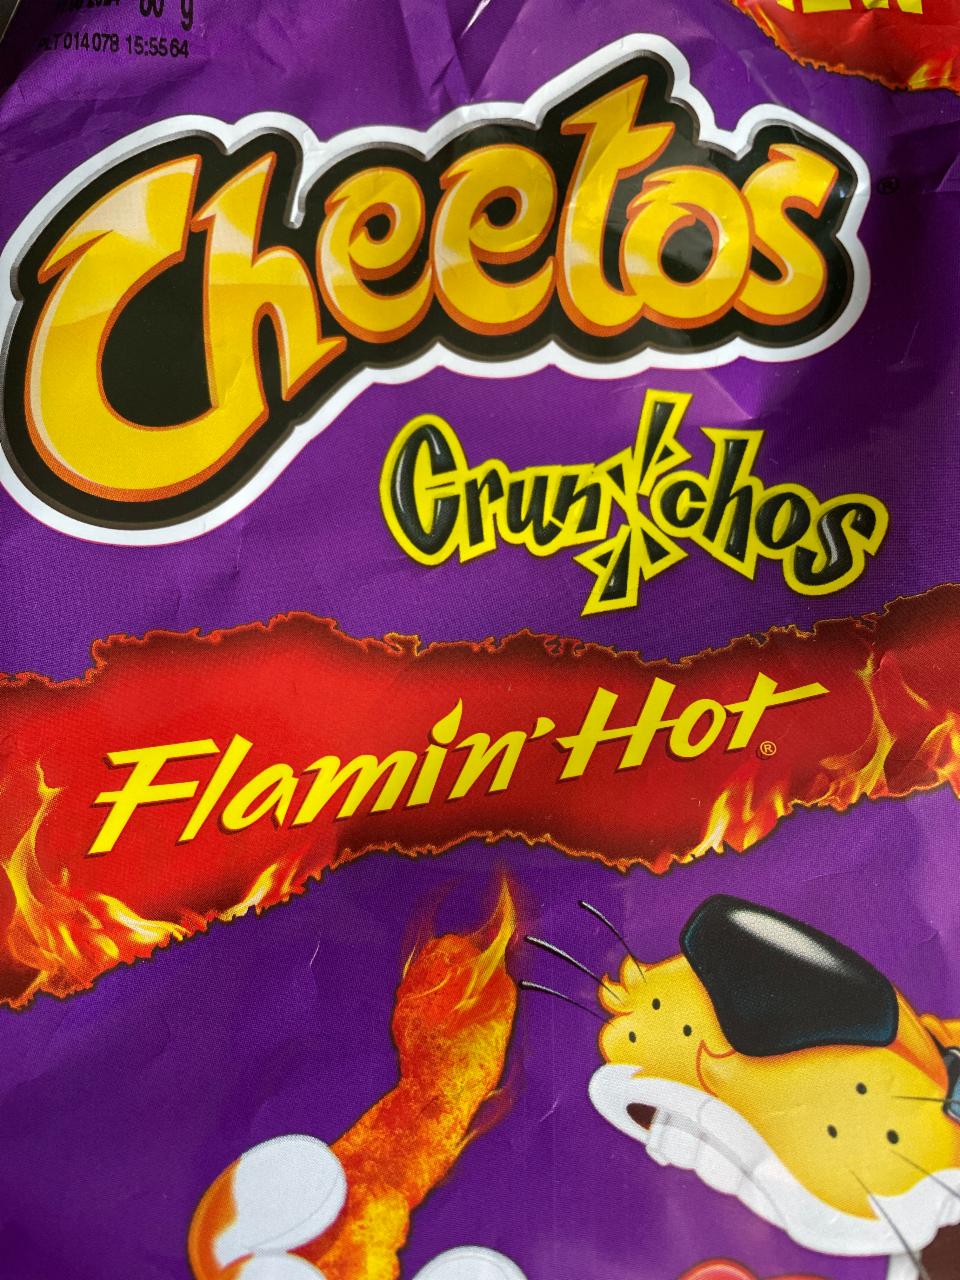 Zdjęcia - Cheetos Crunchos Flamin' Hot Chrupki kukurydziane o smaku bardzo pikantnym 80 g